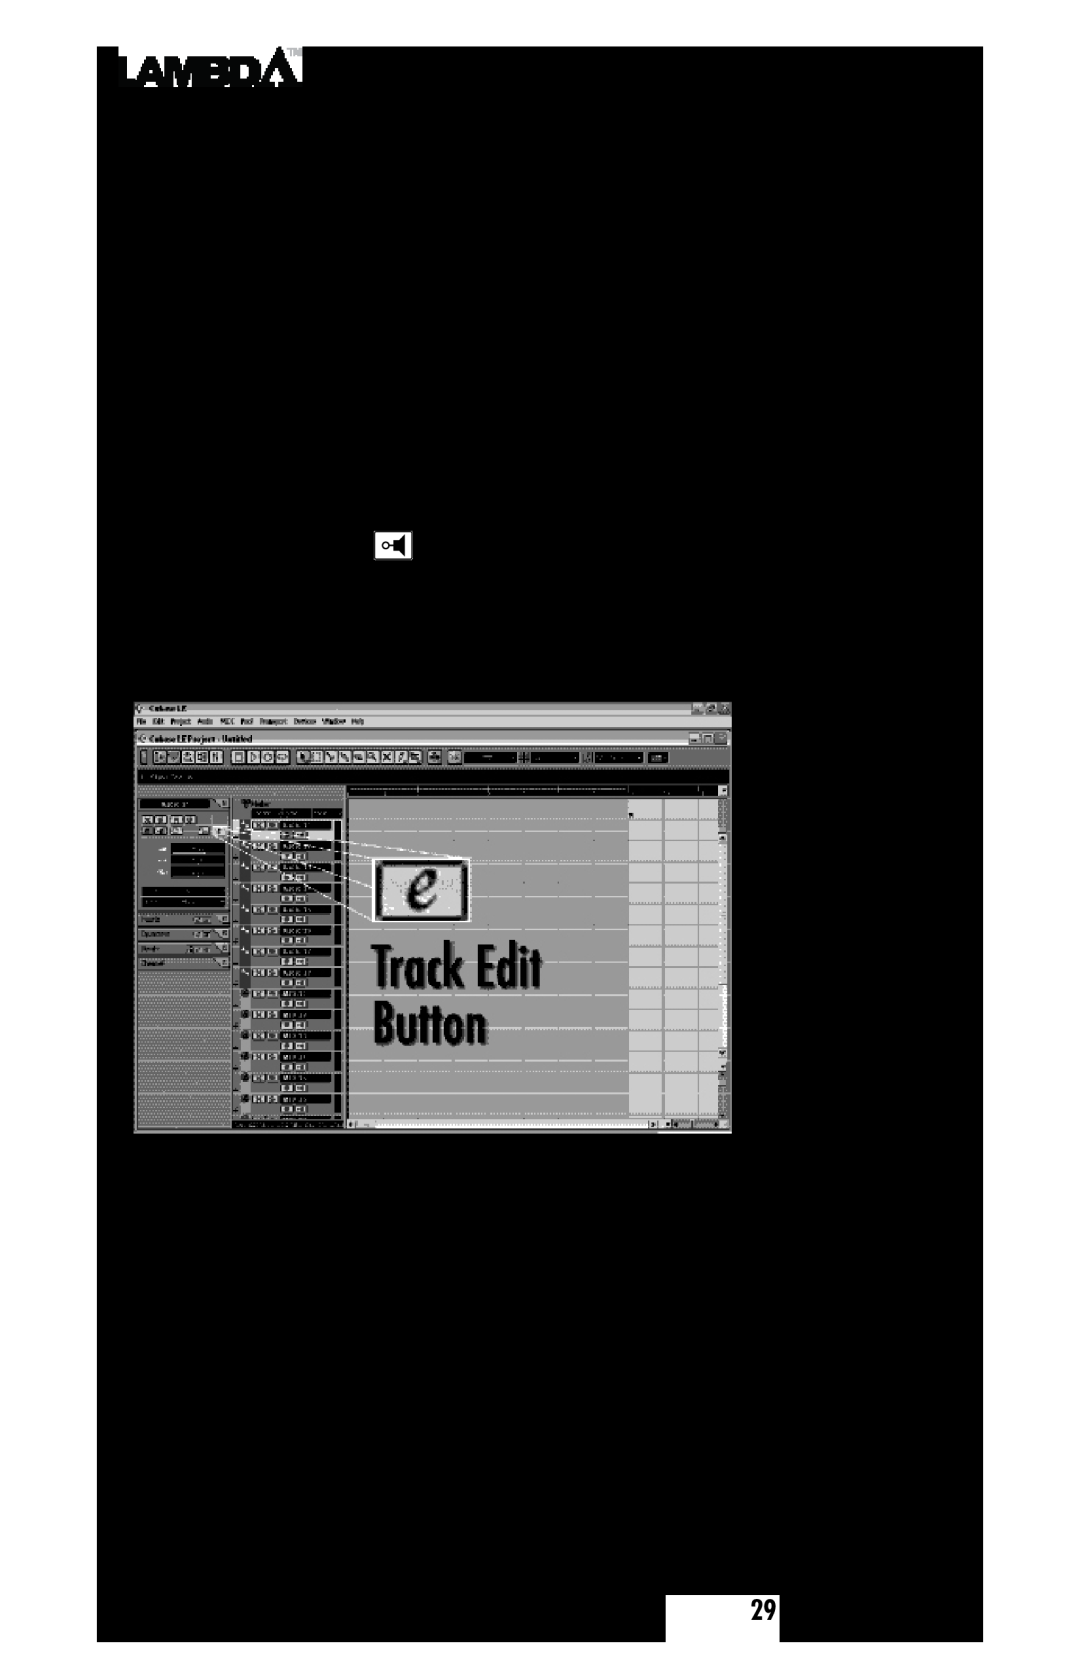 Lexicon Lambda Desktop Recording Studio owner manual Using Software Input Monitoring, Click the Track Edit button 